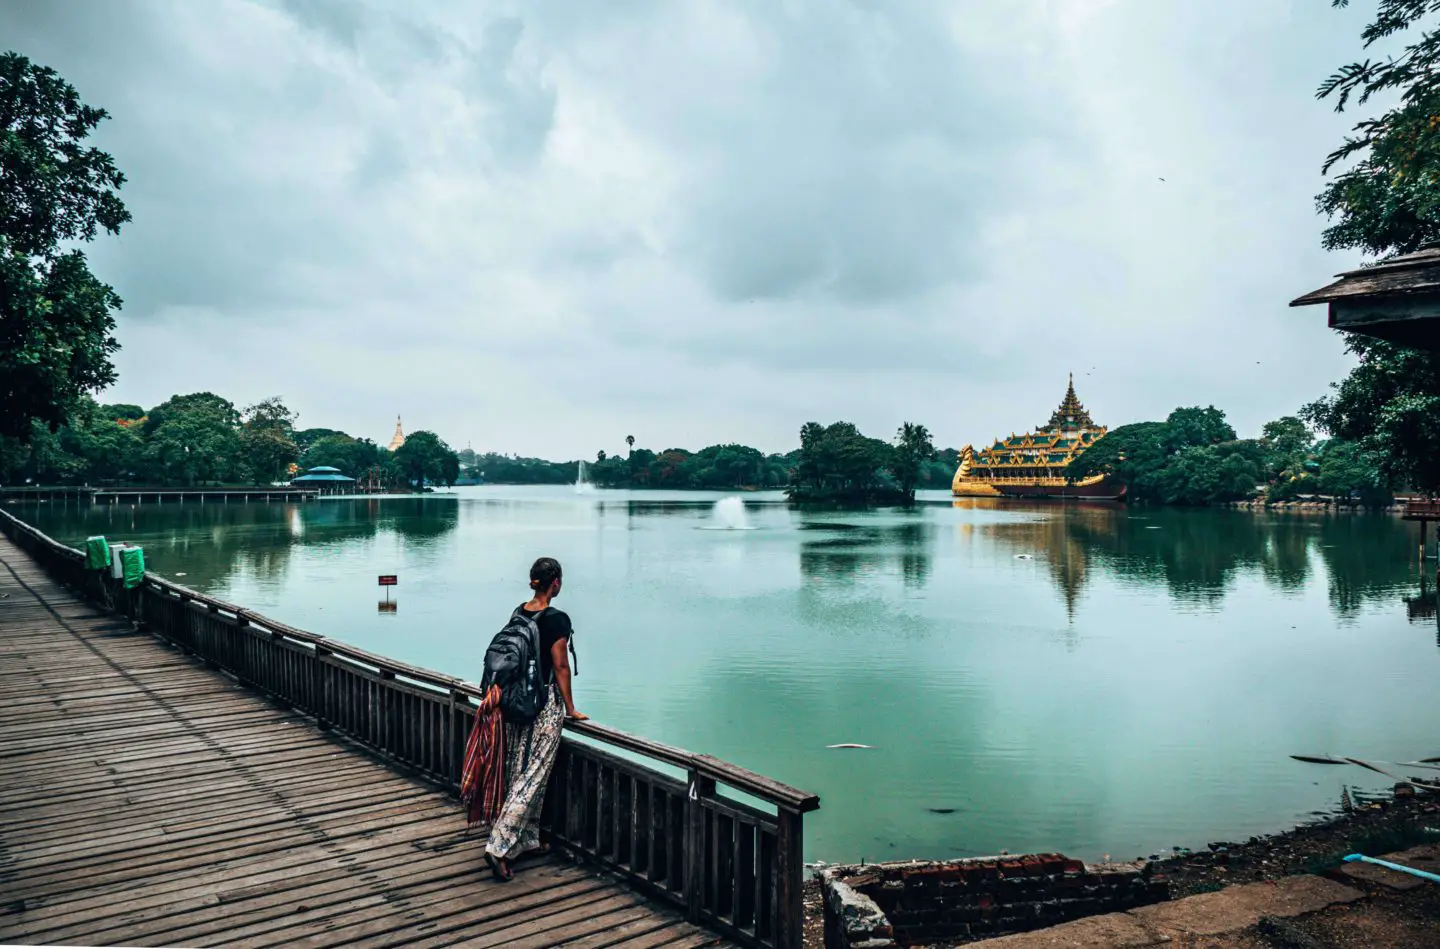 Yangon itinerary - 3 days in Yangon - Lake Kandawgyi in Yangon Myanmar